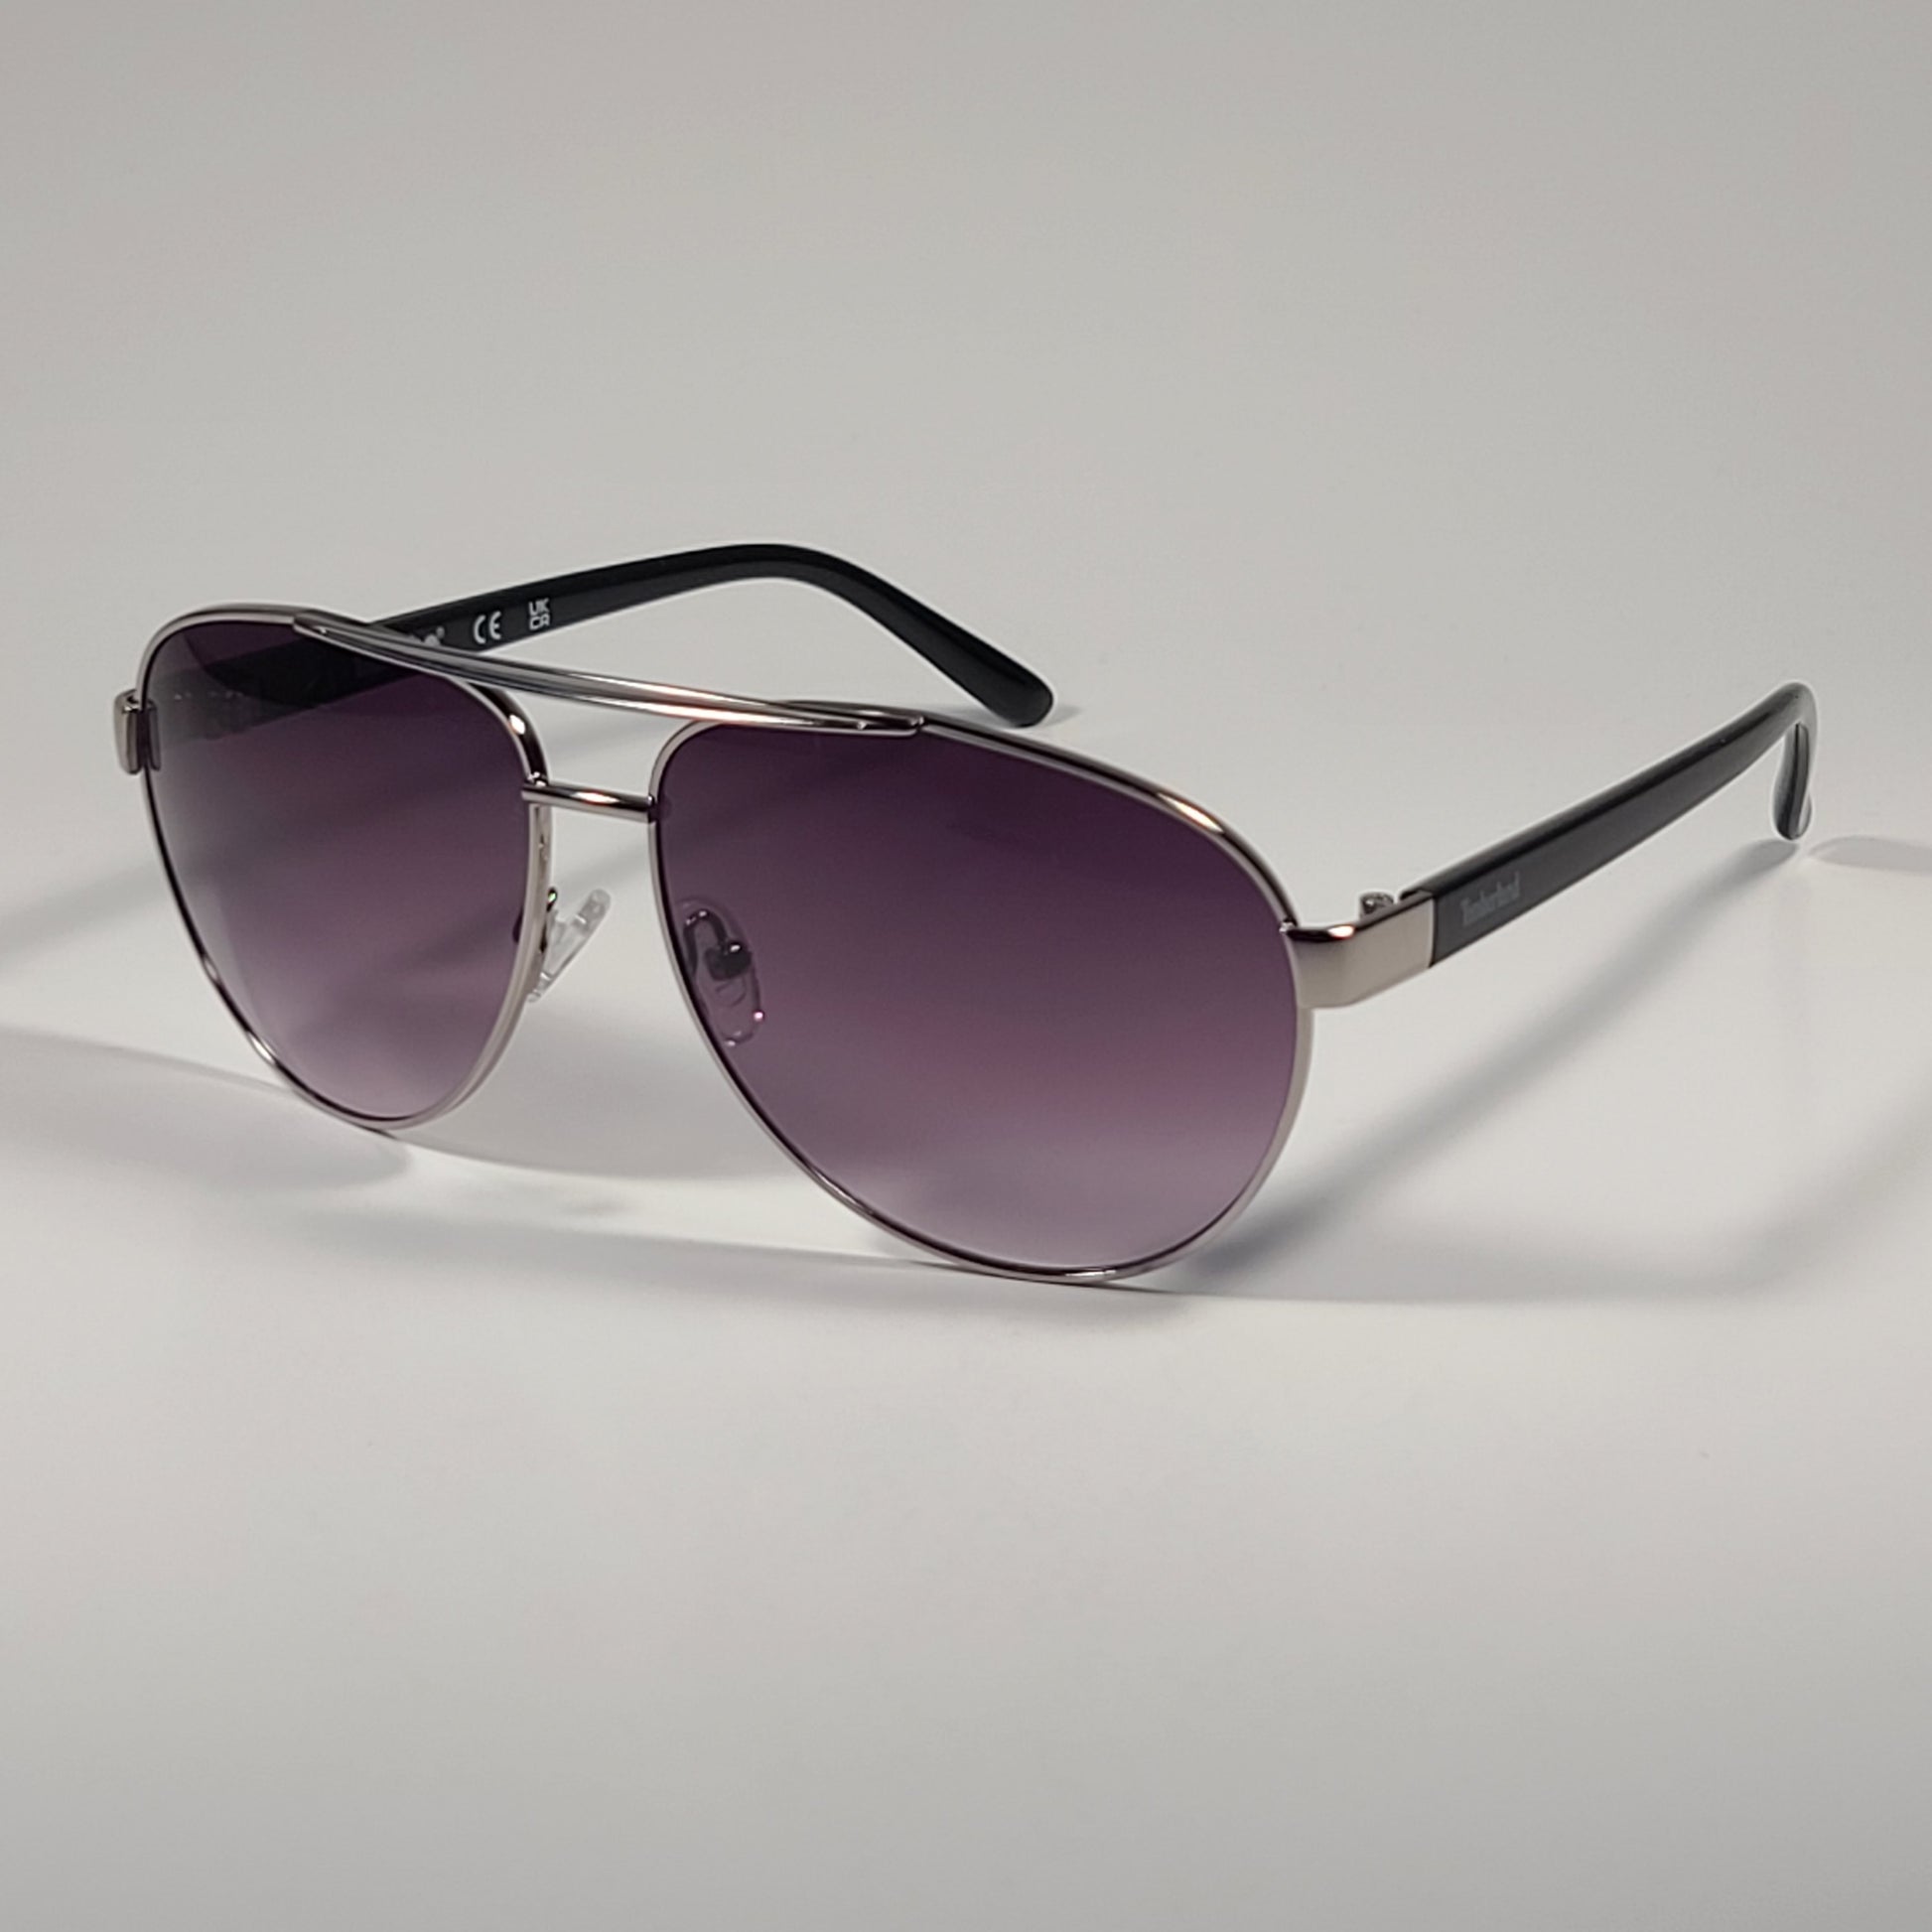 Timberland Aviator Sunglasses Silver Shiny Black Frame Smoke Gradient Lens TB7141 08B - Sunglasses